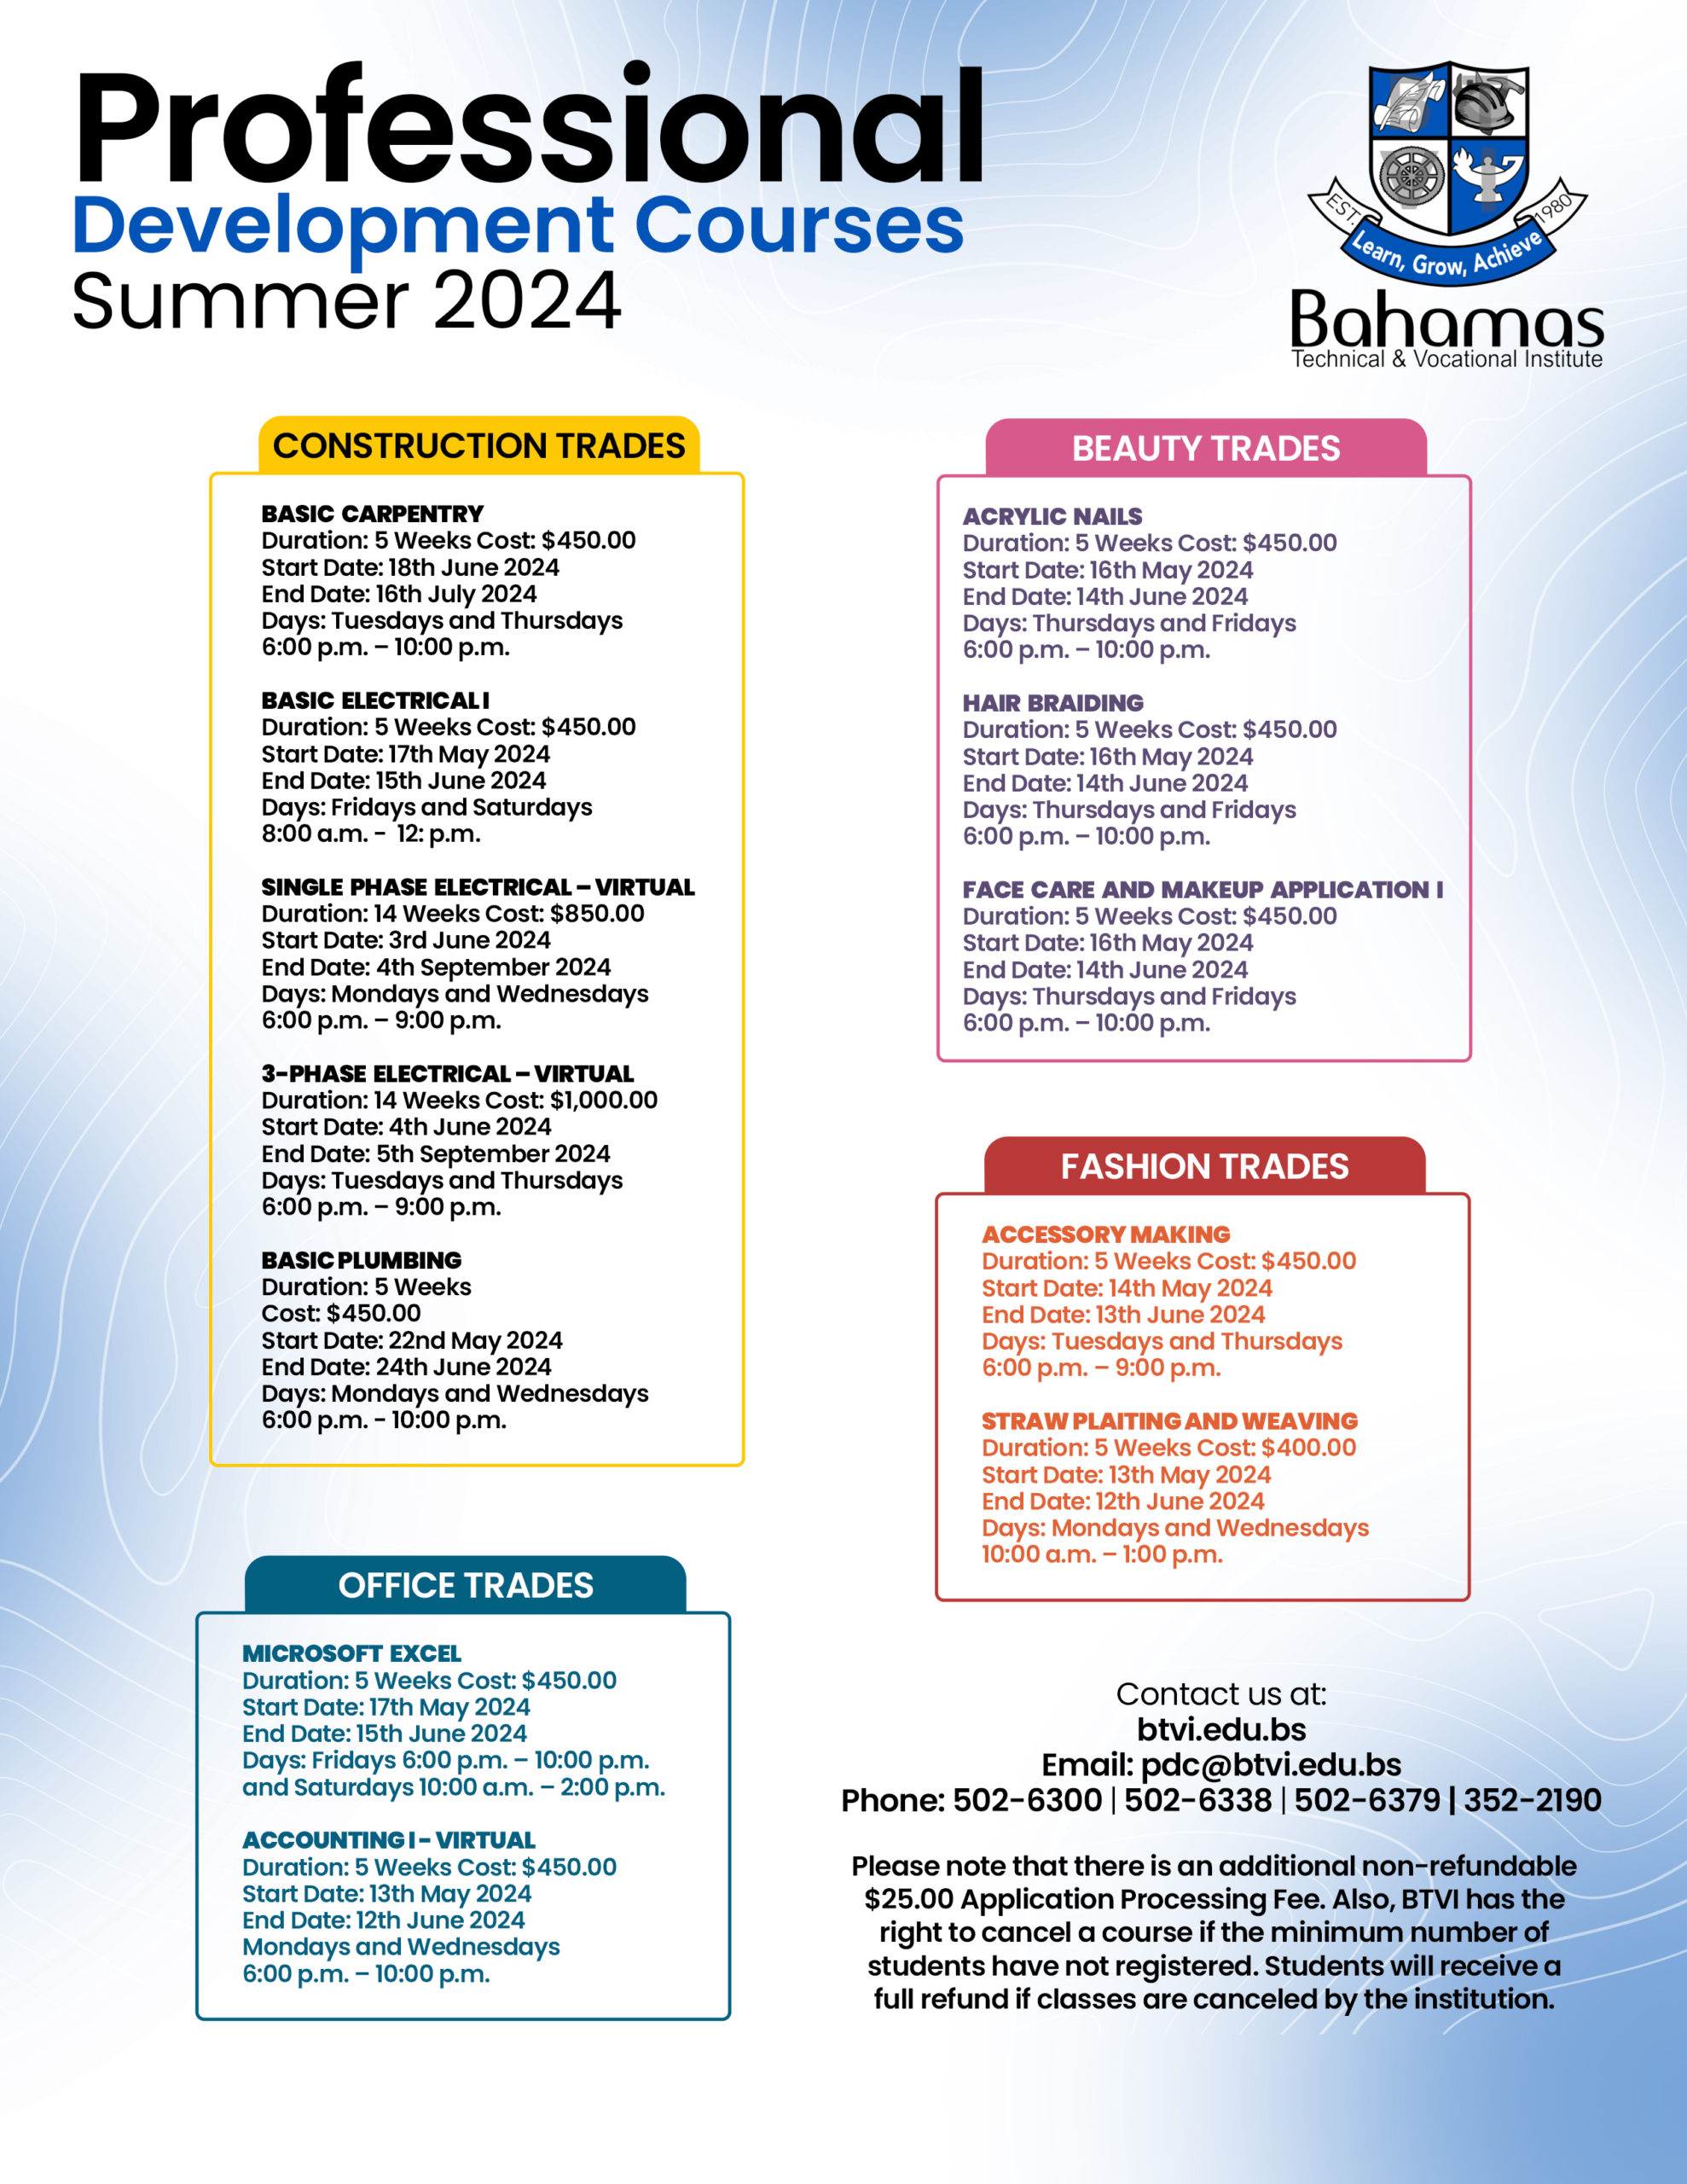 BTVI Professional Development Courses Summer 2024